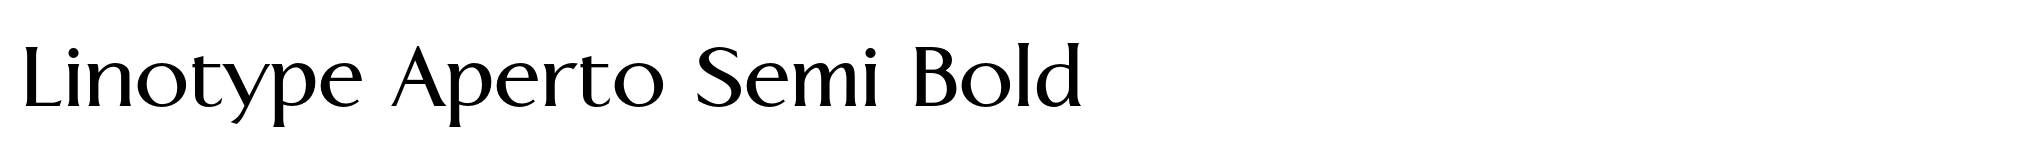 Linotype Aperto Semi Bold image